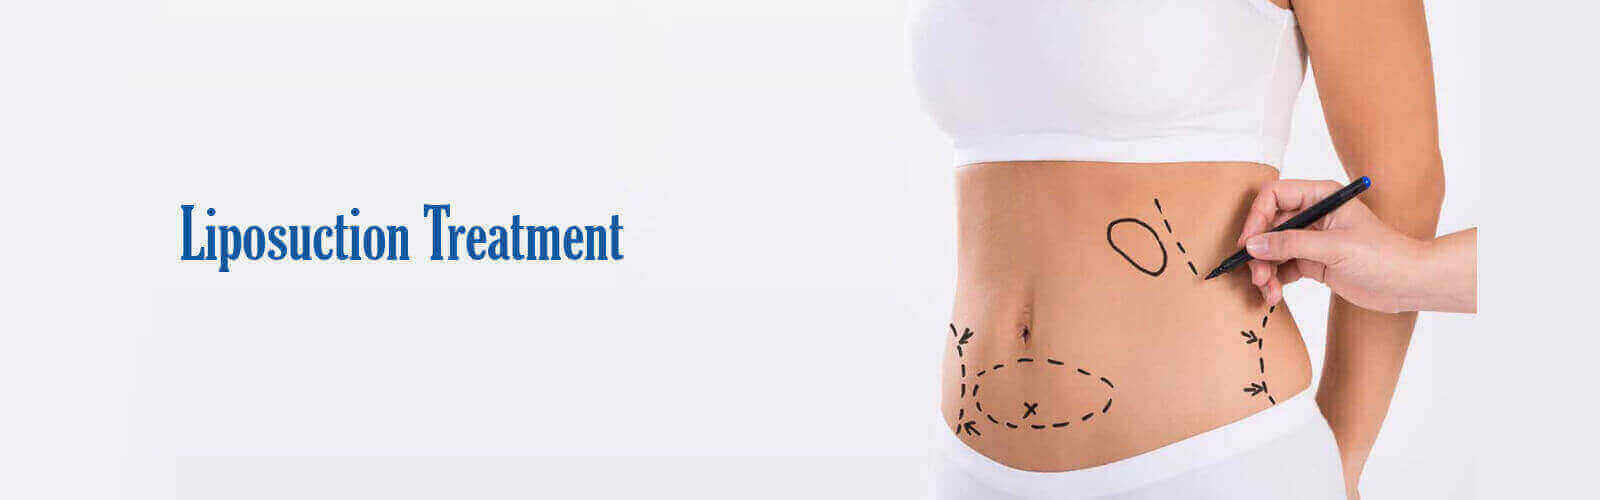 Liposuction Treatment in Florida